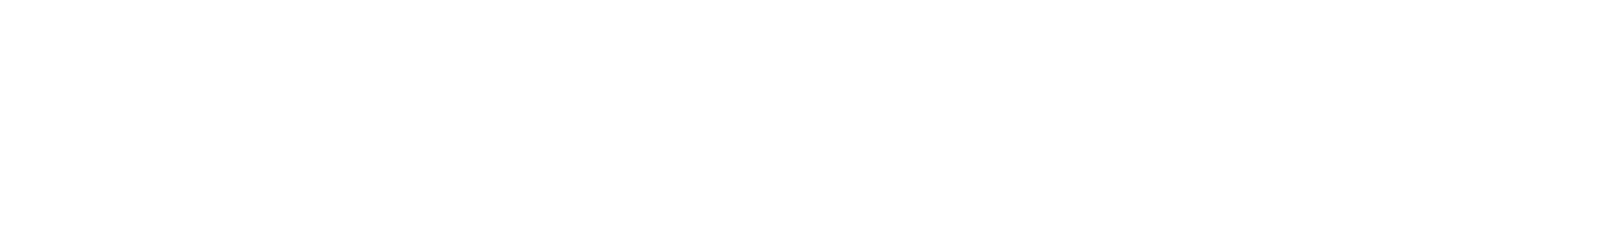 Marqeta Logo groß für dunkle Hintergründe (transparentes PNG)